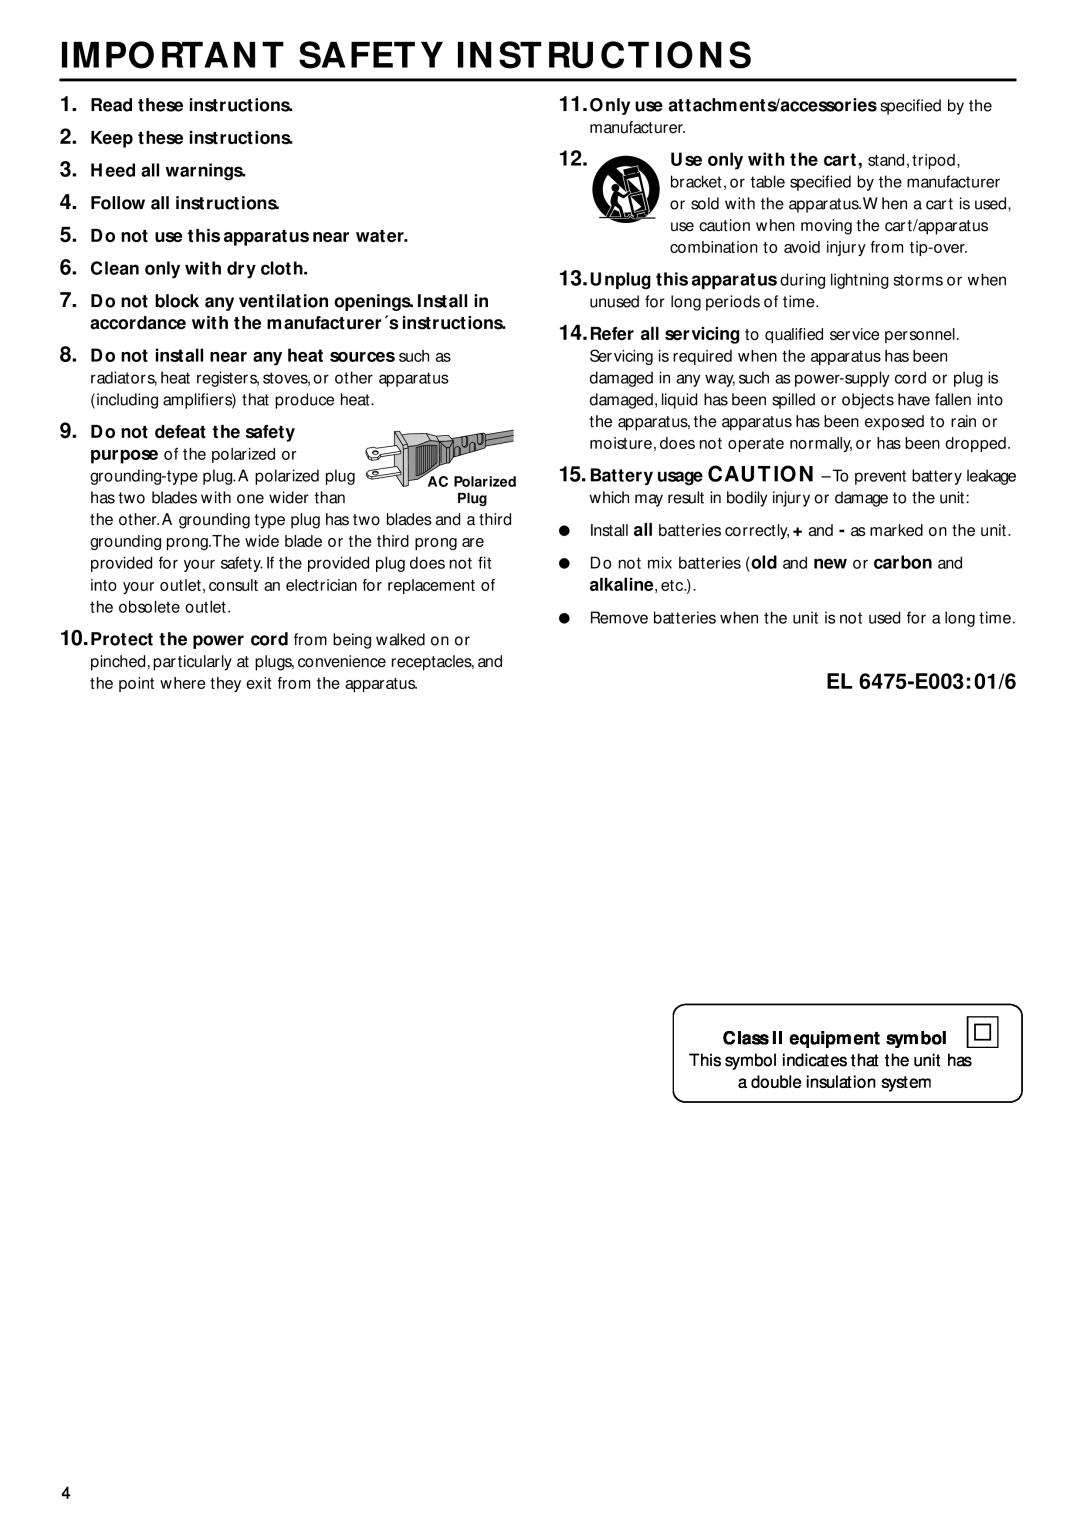 Philips LX7000SA warranty Important Safety Instructions, EL 6475-E003 01/6 